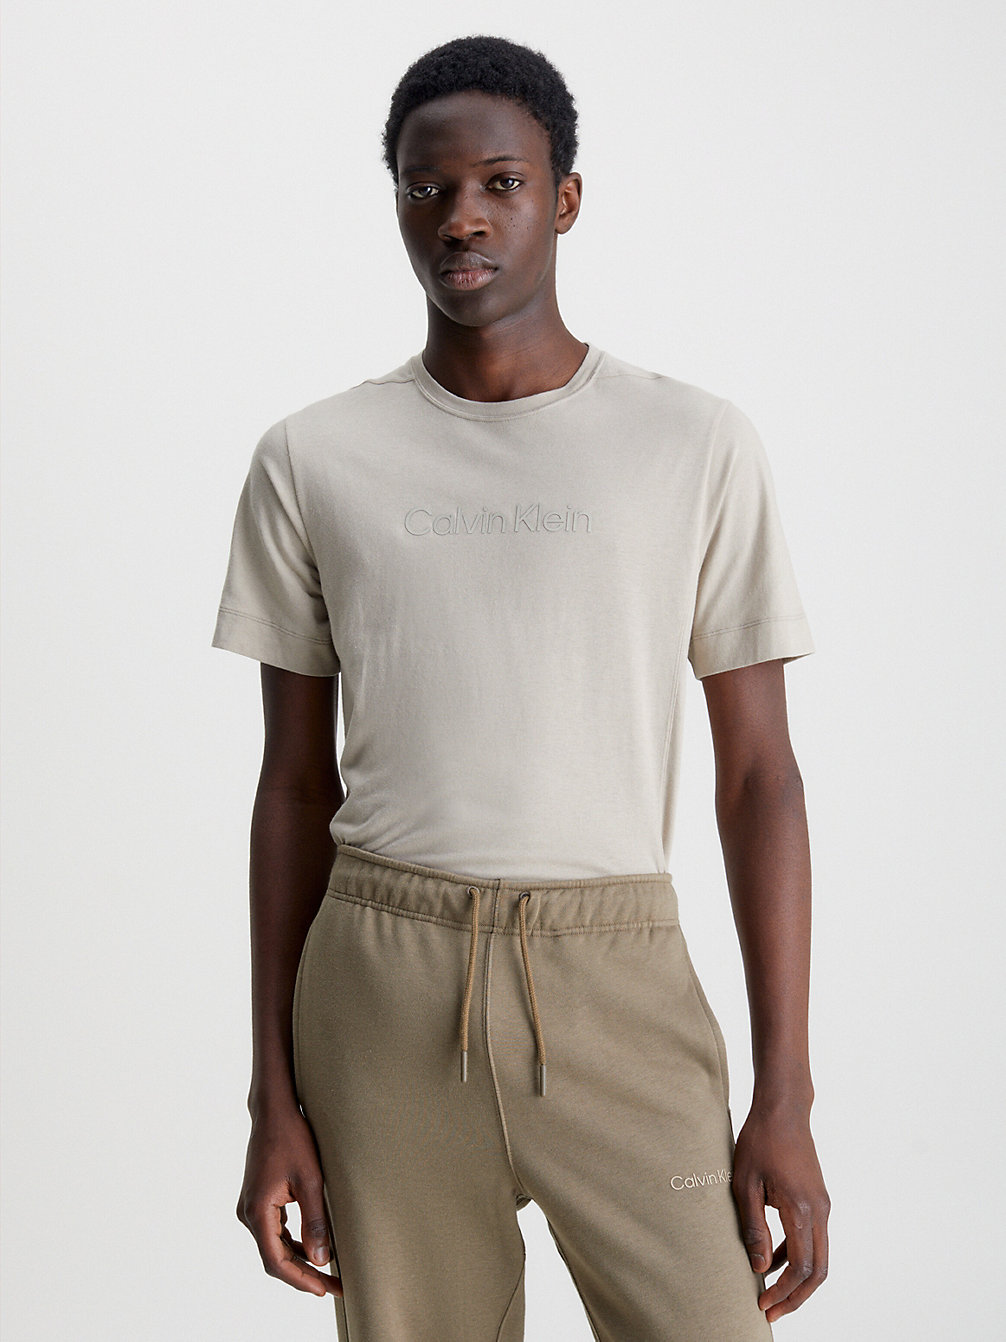 WINTER LINEN > T-Shirt Sportowy > undefined Mężczyźni - Calvin Klein